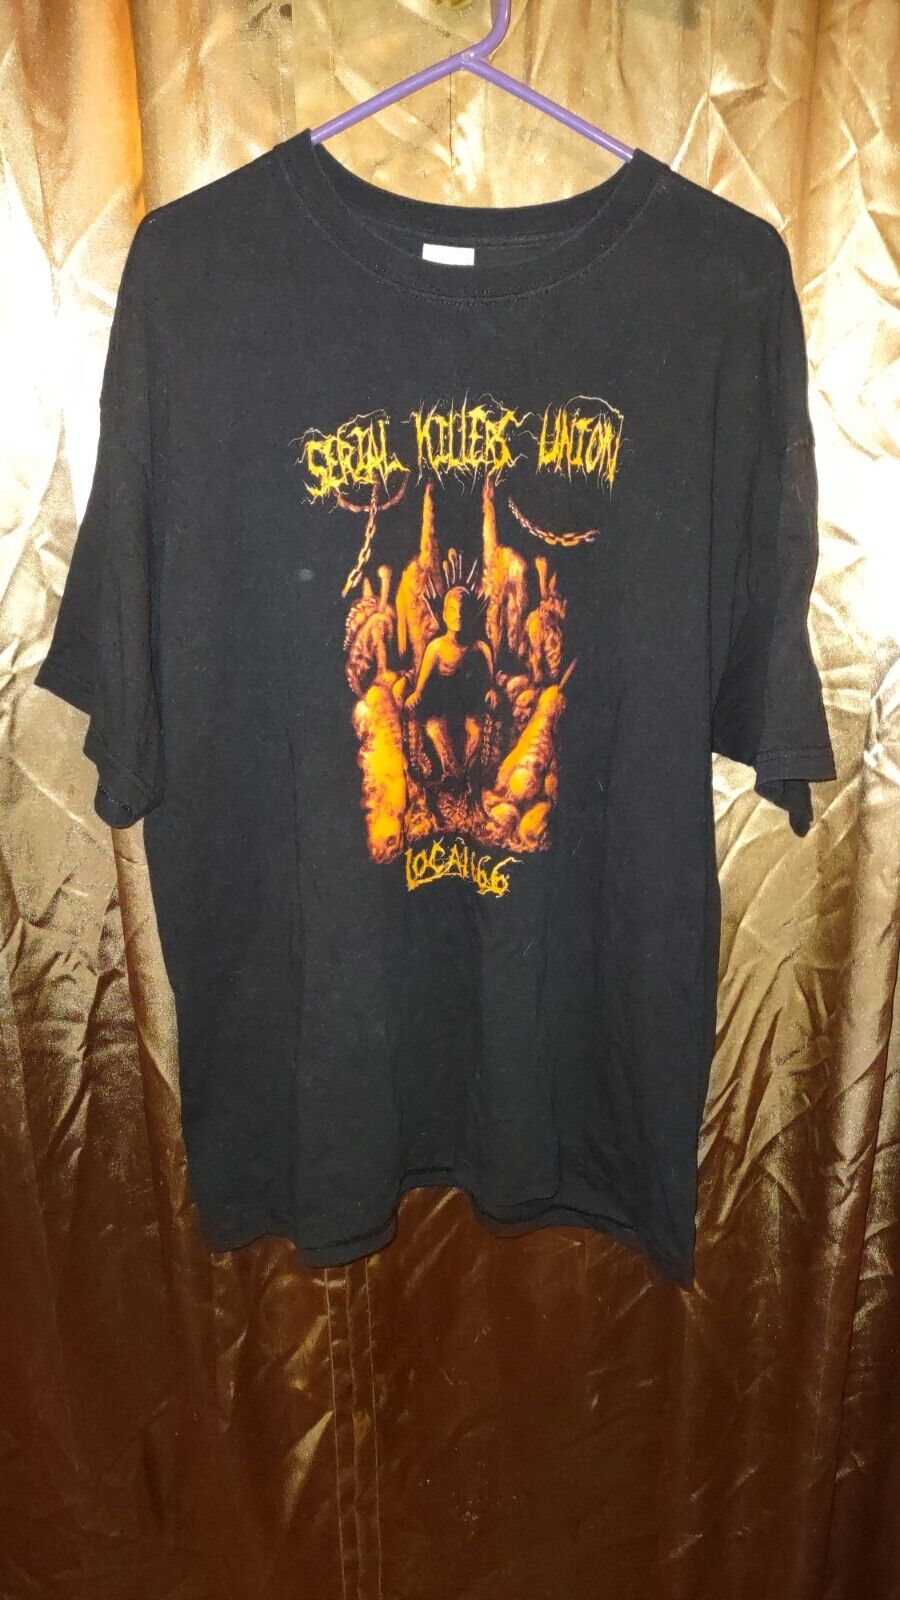 Serial Killer Union Local 666 T Shirt Sexually Pe… - image 2